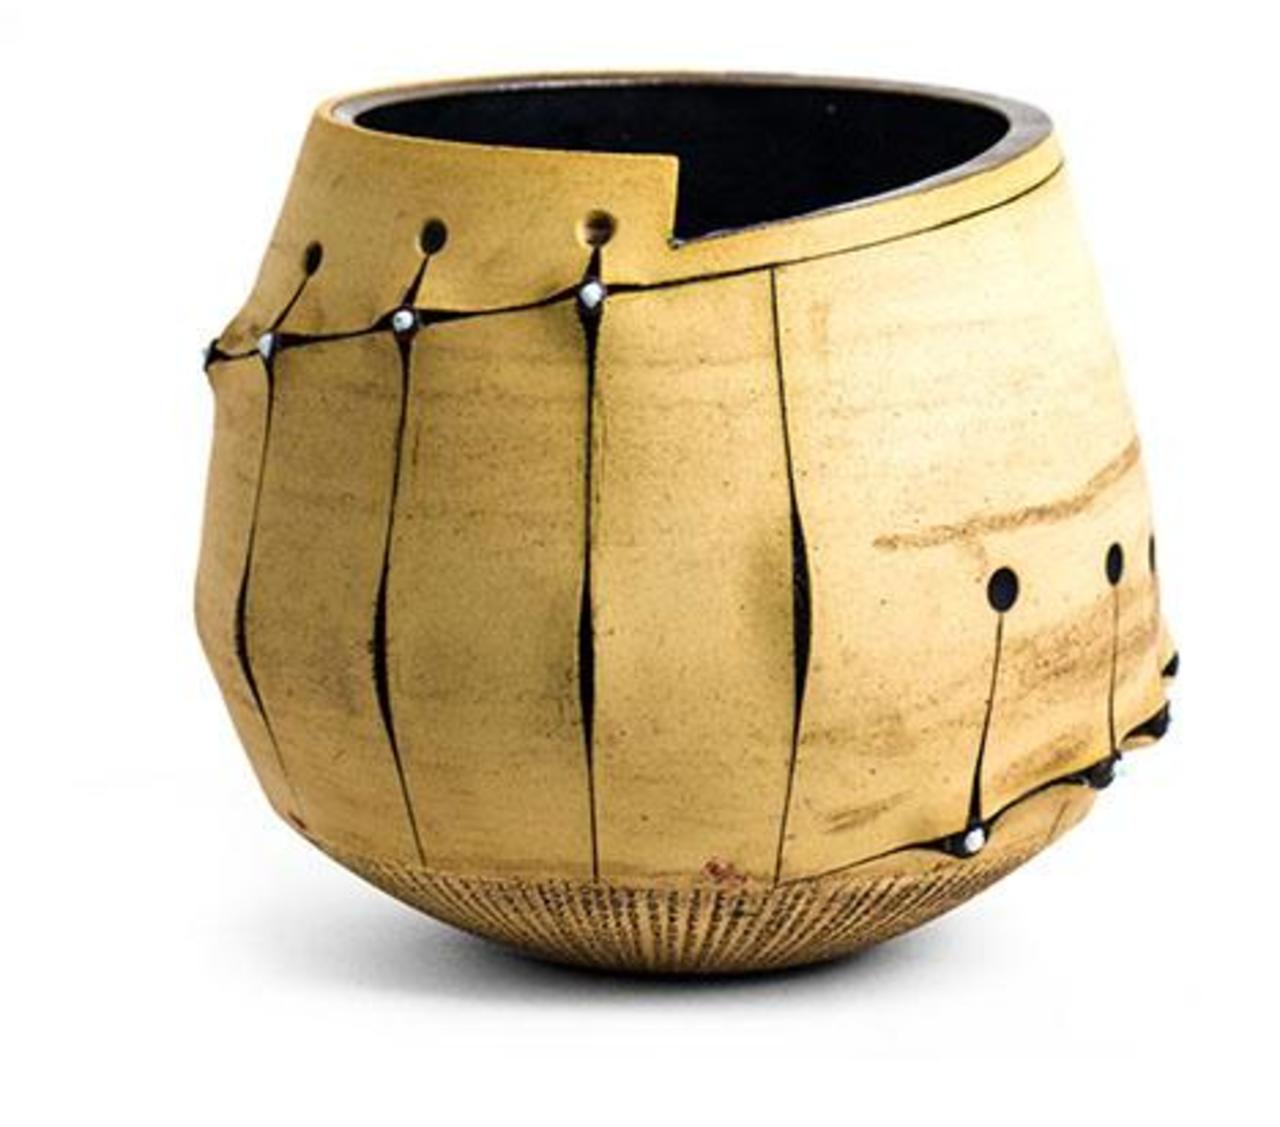 #Ceramics by #Imiso ceramics #Southafrica #africa http://www.imisoceramics.co.za/scarified.html http://t.co/IyErzdGESn